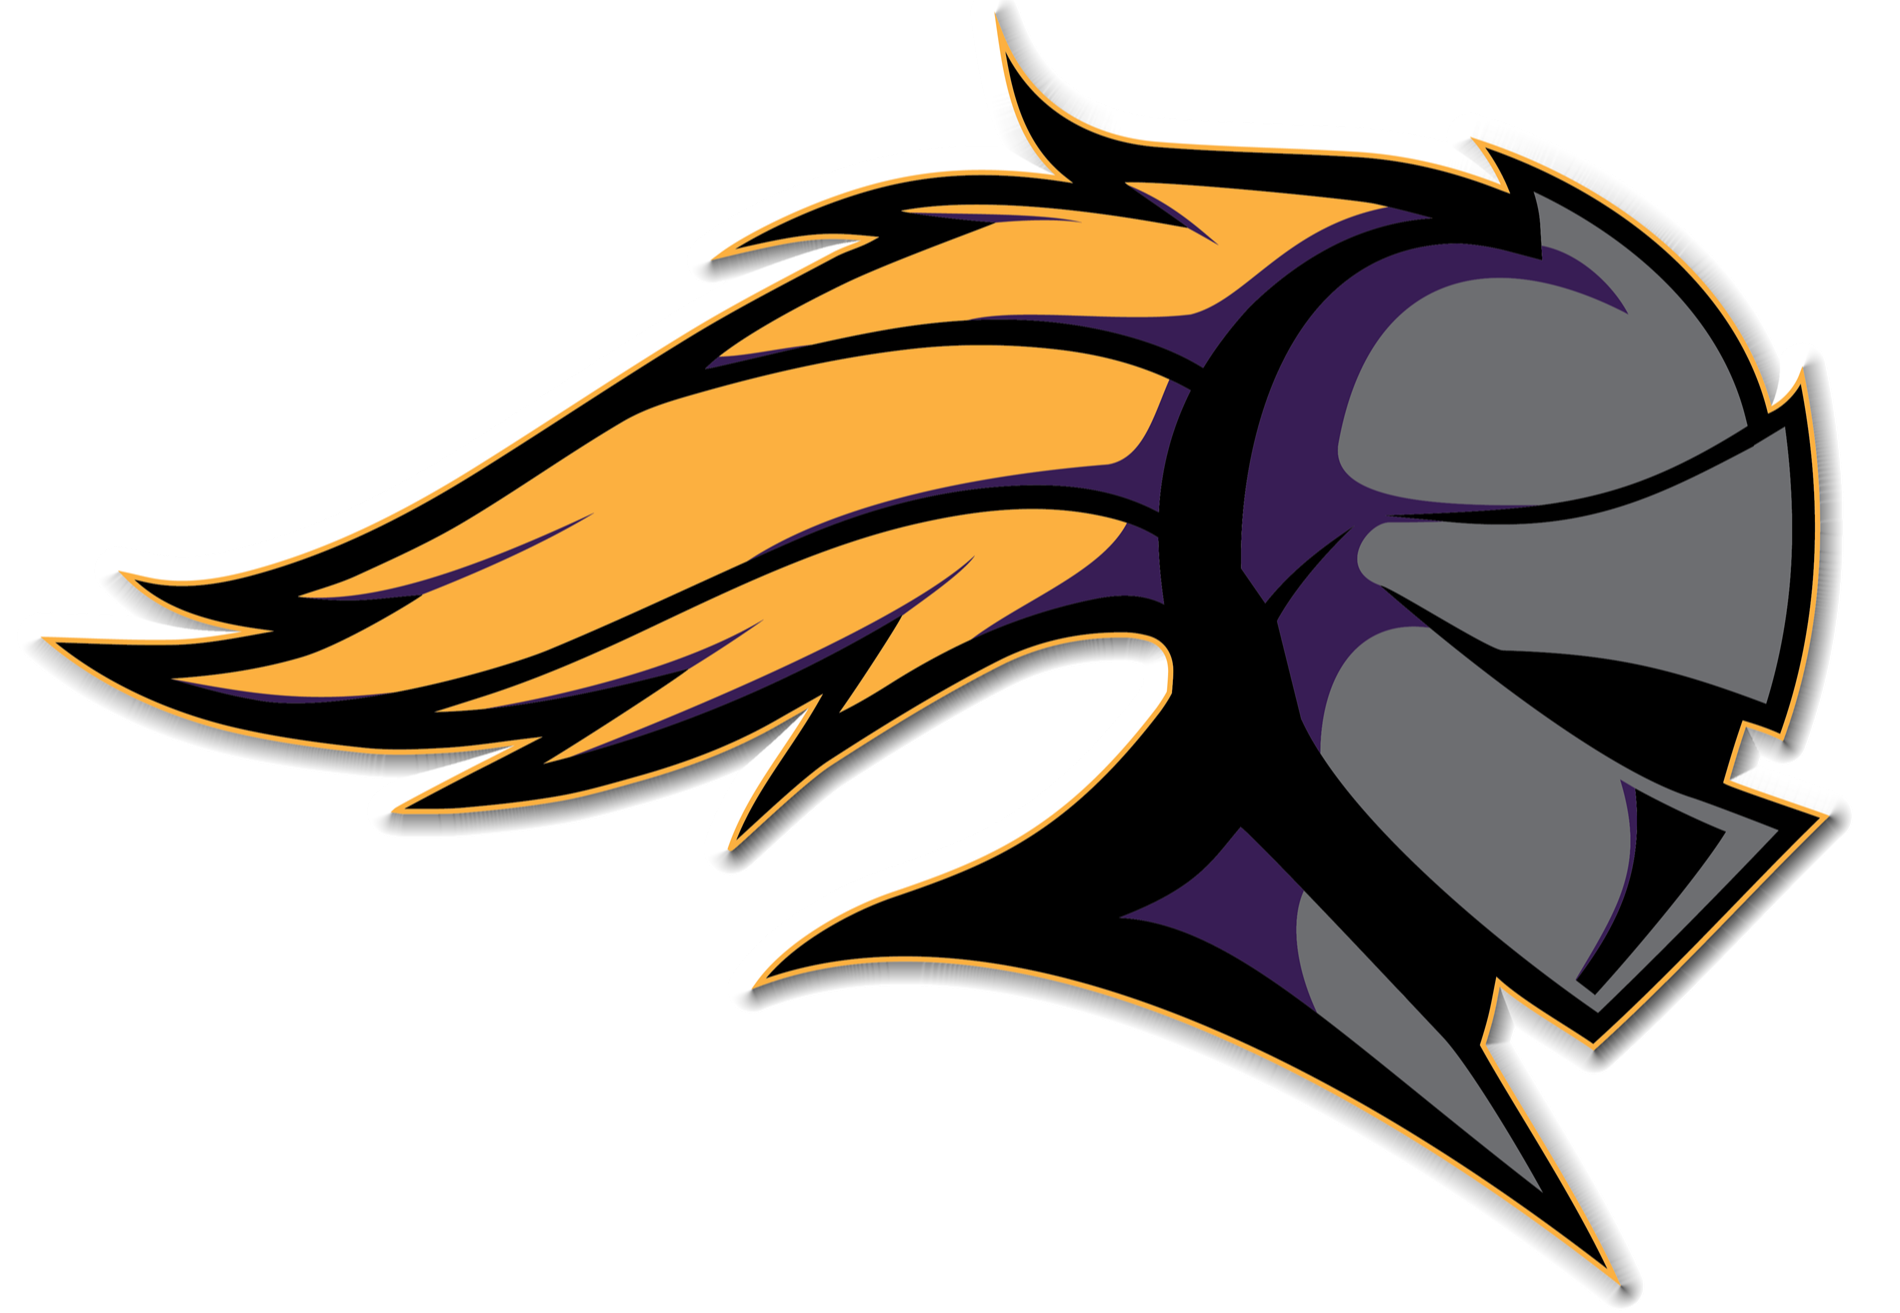 Lake Havasu High School logo - Knight mascot